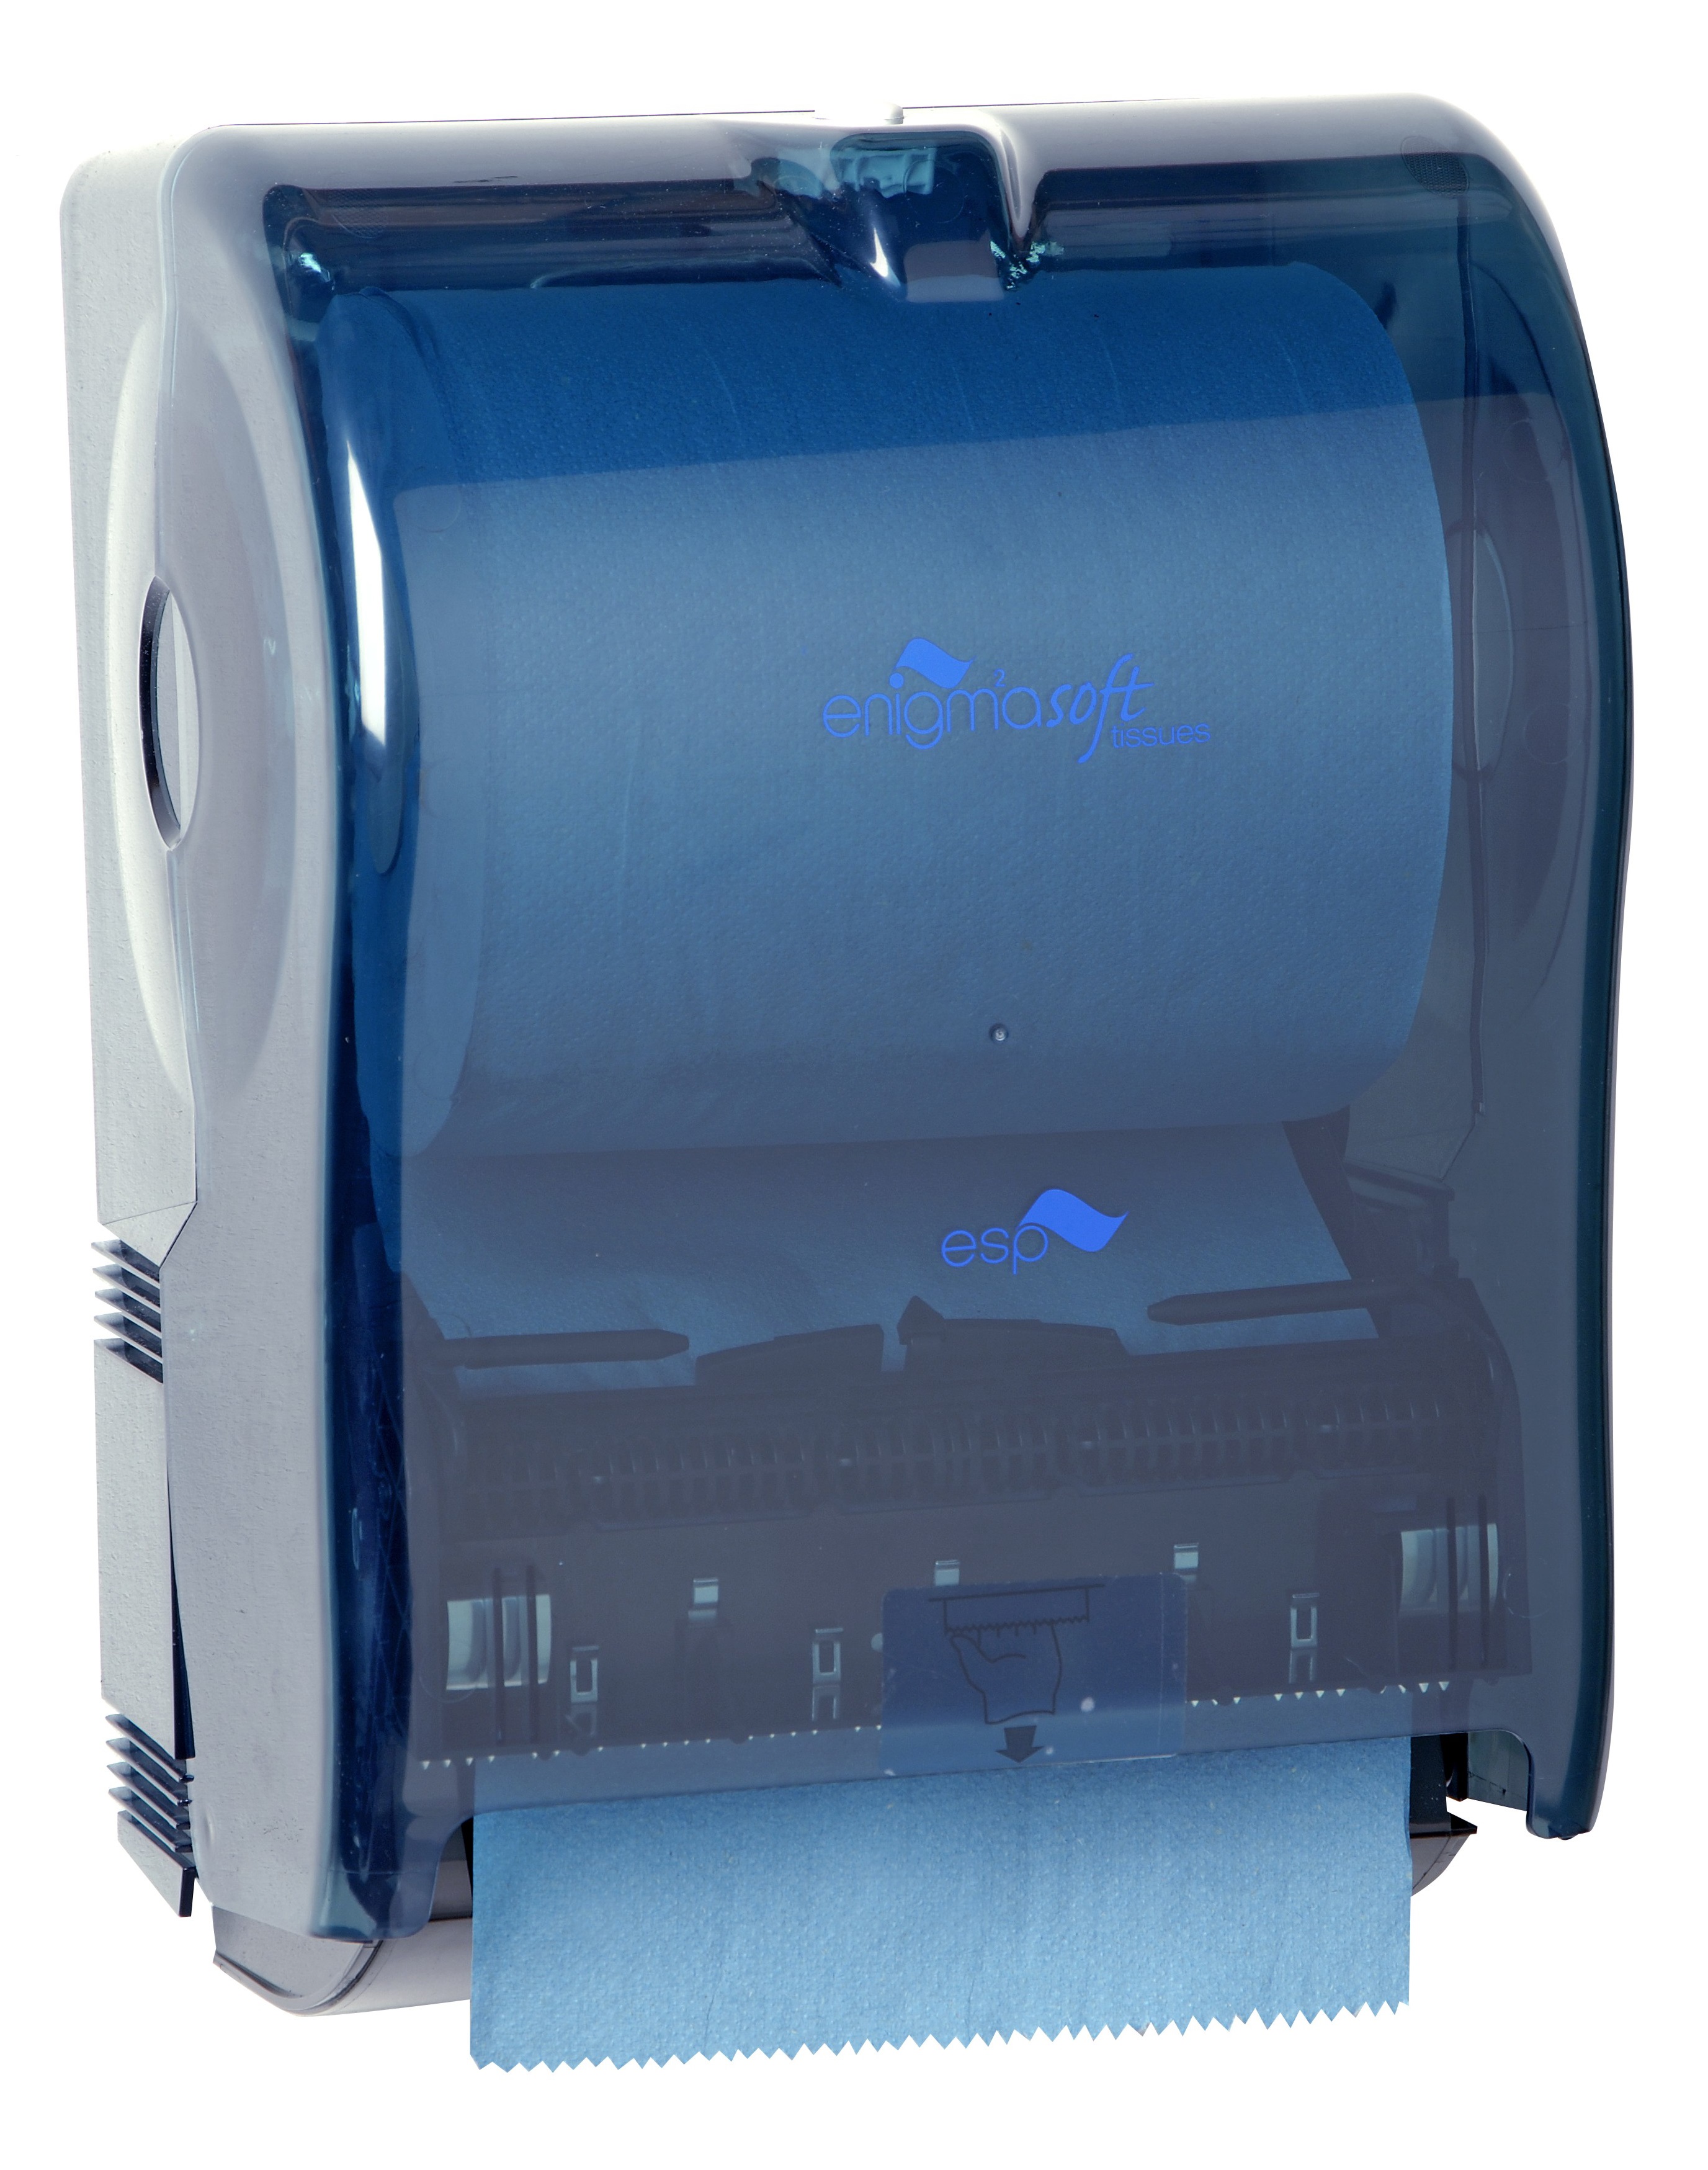 Mechanical AutocutTowel Dispenser - Blue